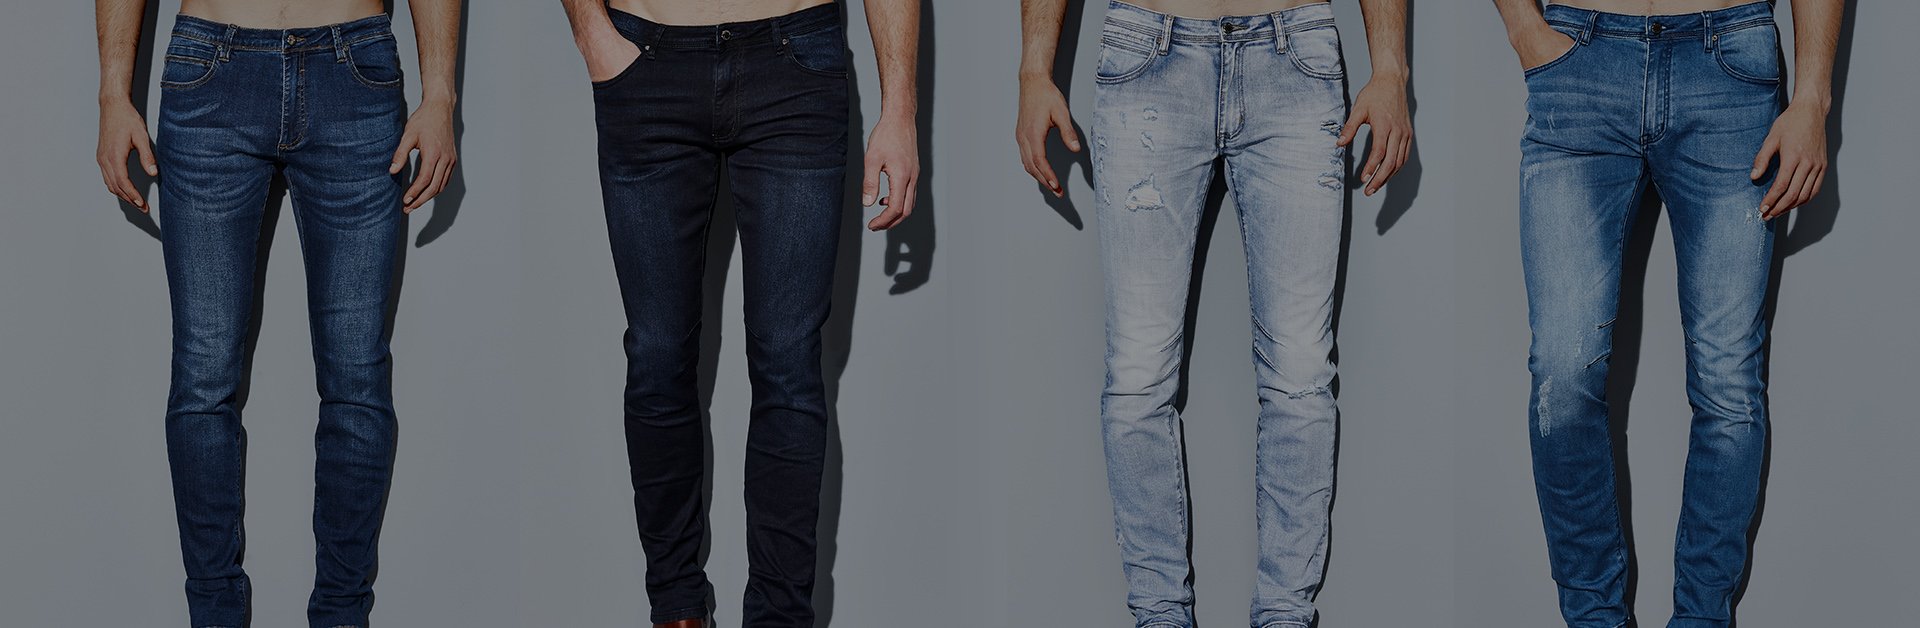 Men's Clothing and Fashion Tips: Denim